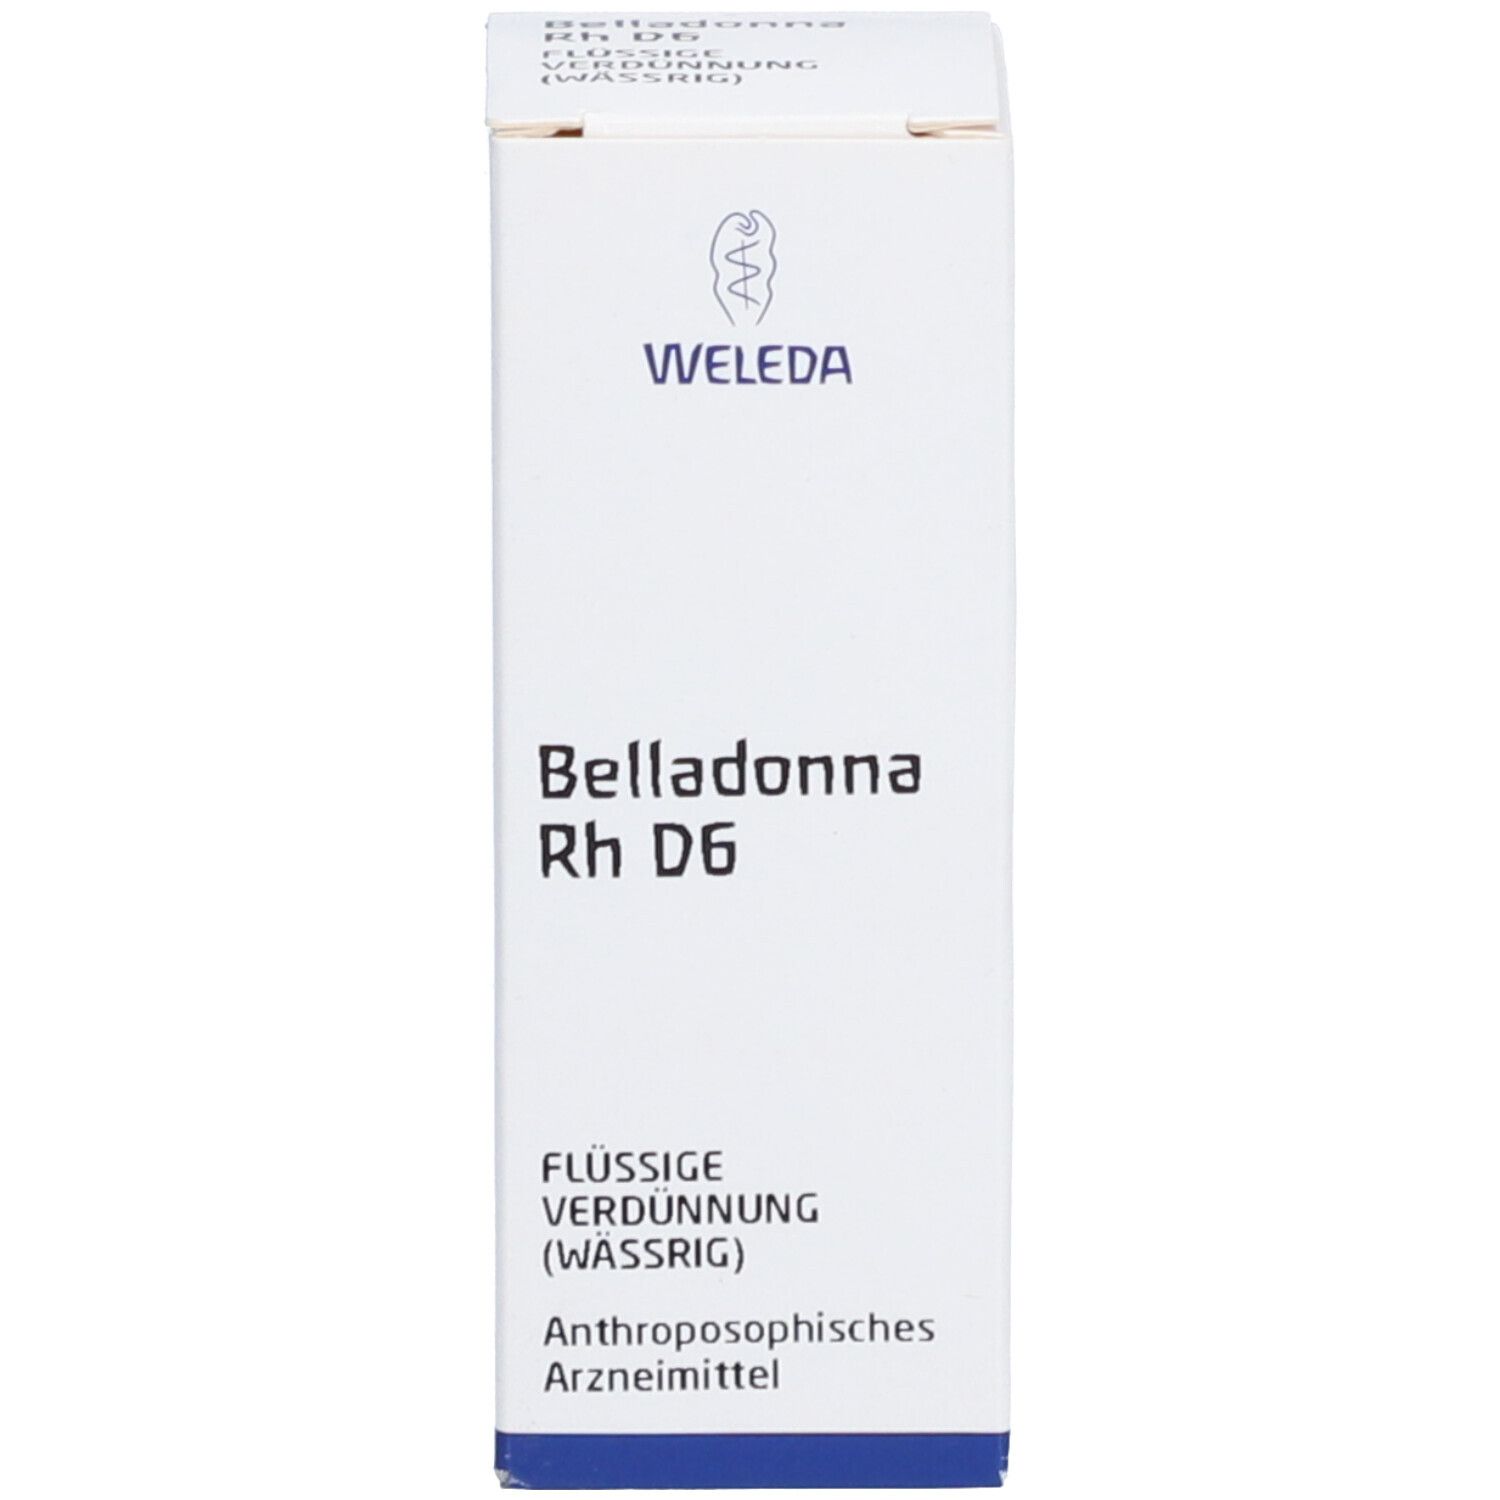 Belladonna Rh D6 Dilution